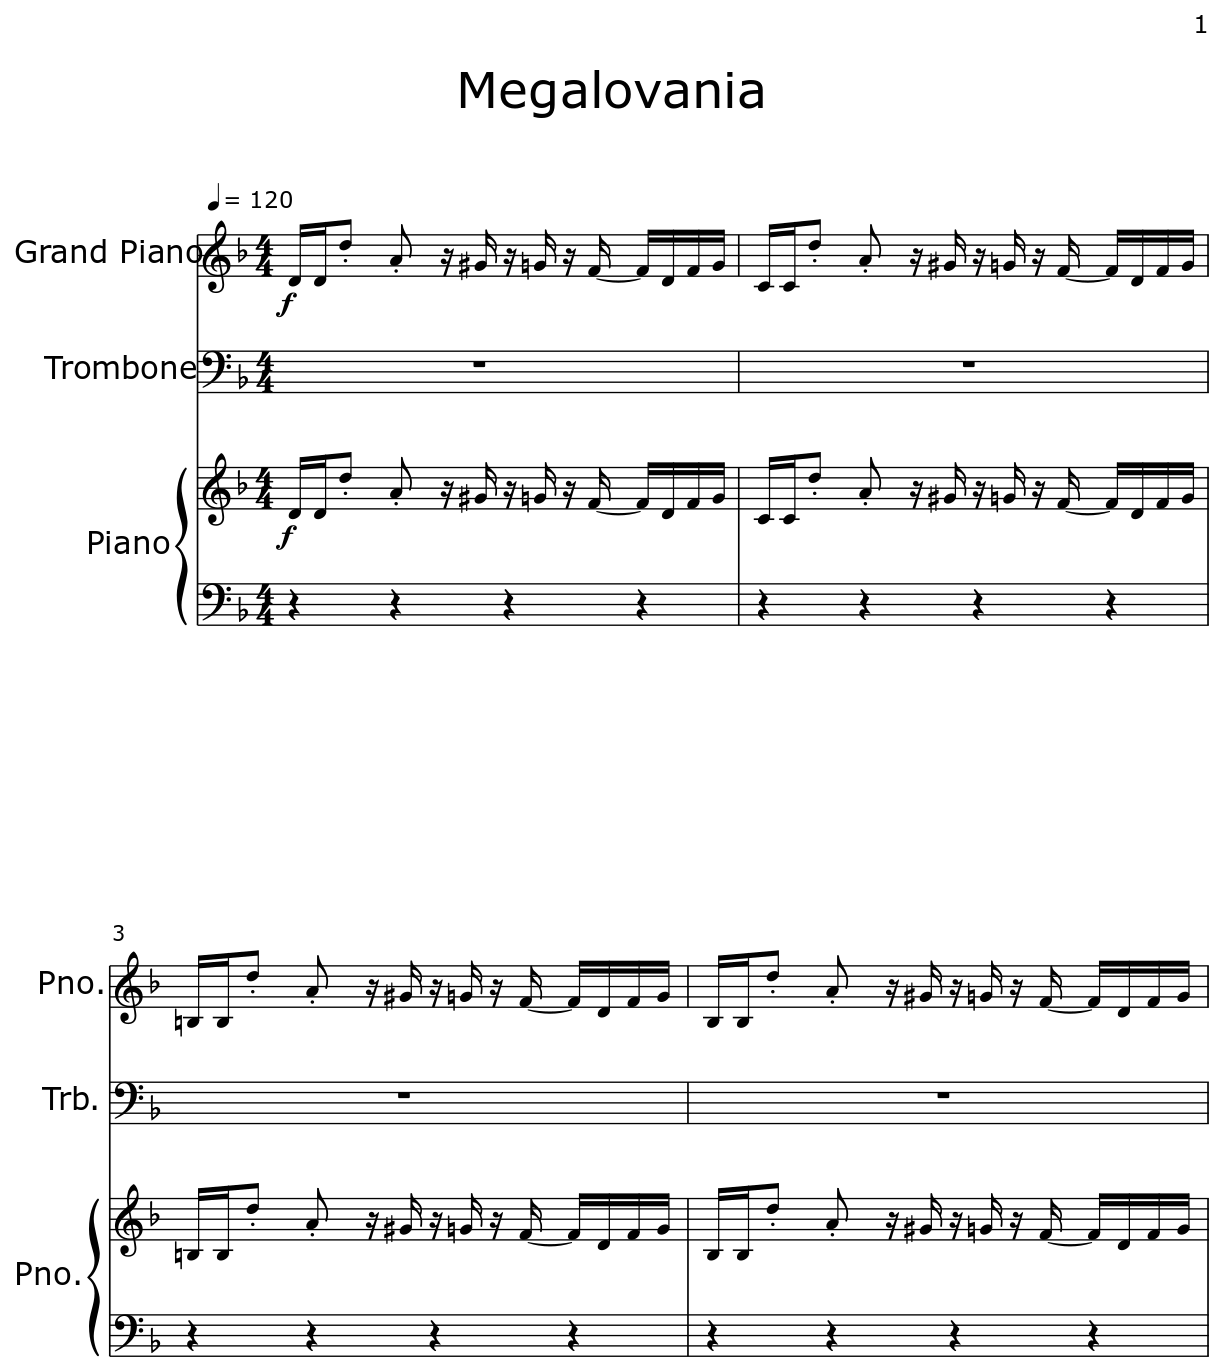 Megalovania Sheet music for Piano, Trombone